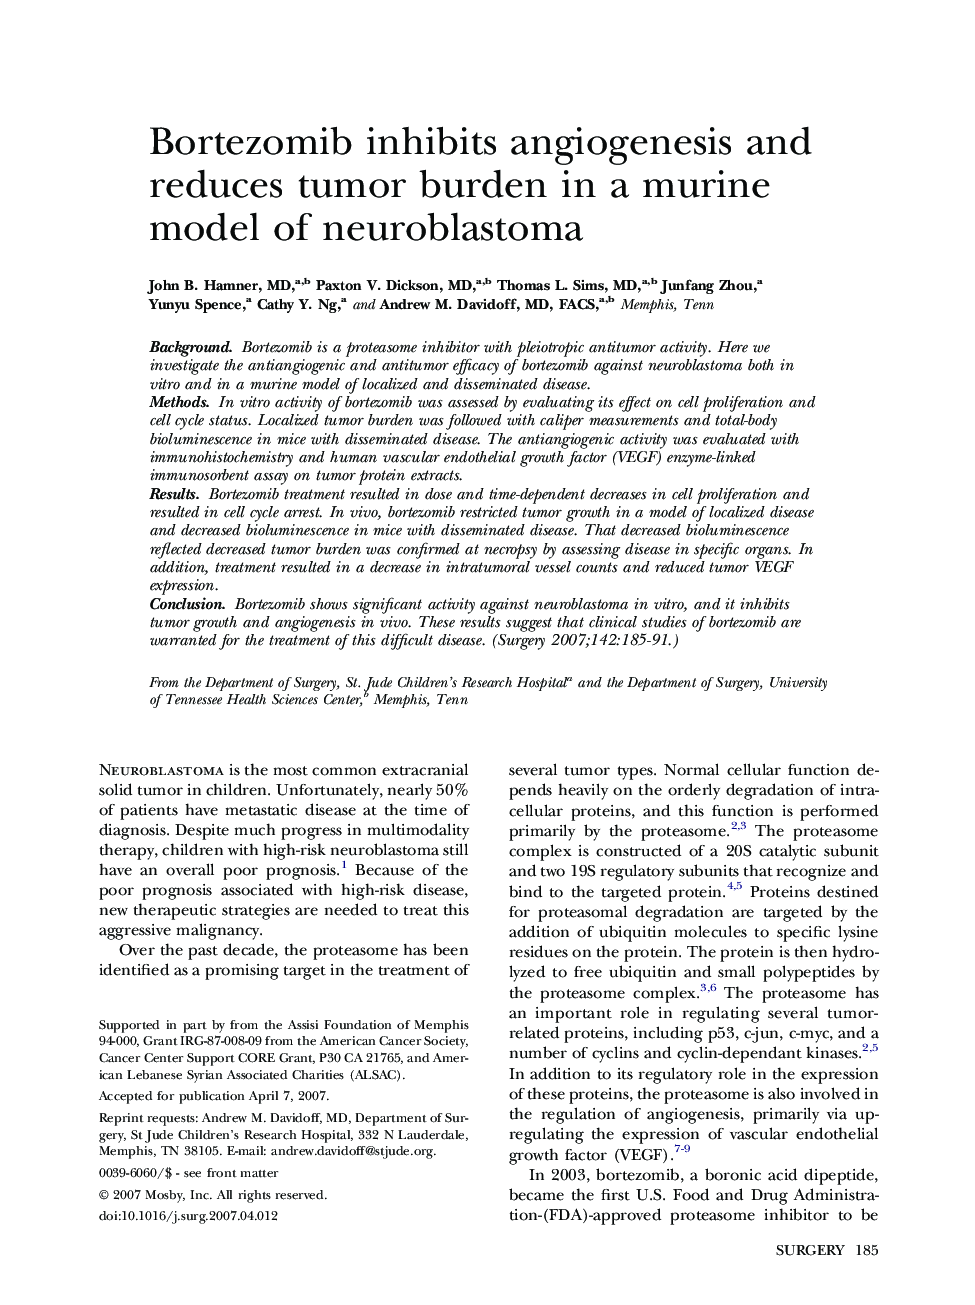 Bortezomib inhibits angiogenesis and reduces tumor burden in a murine model of neuroblastoma 